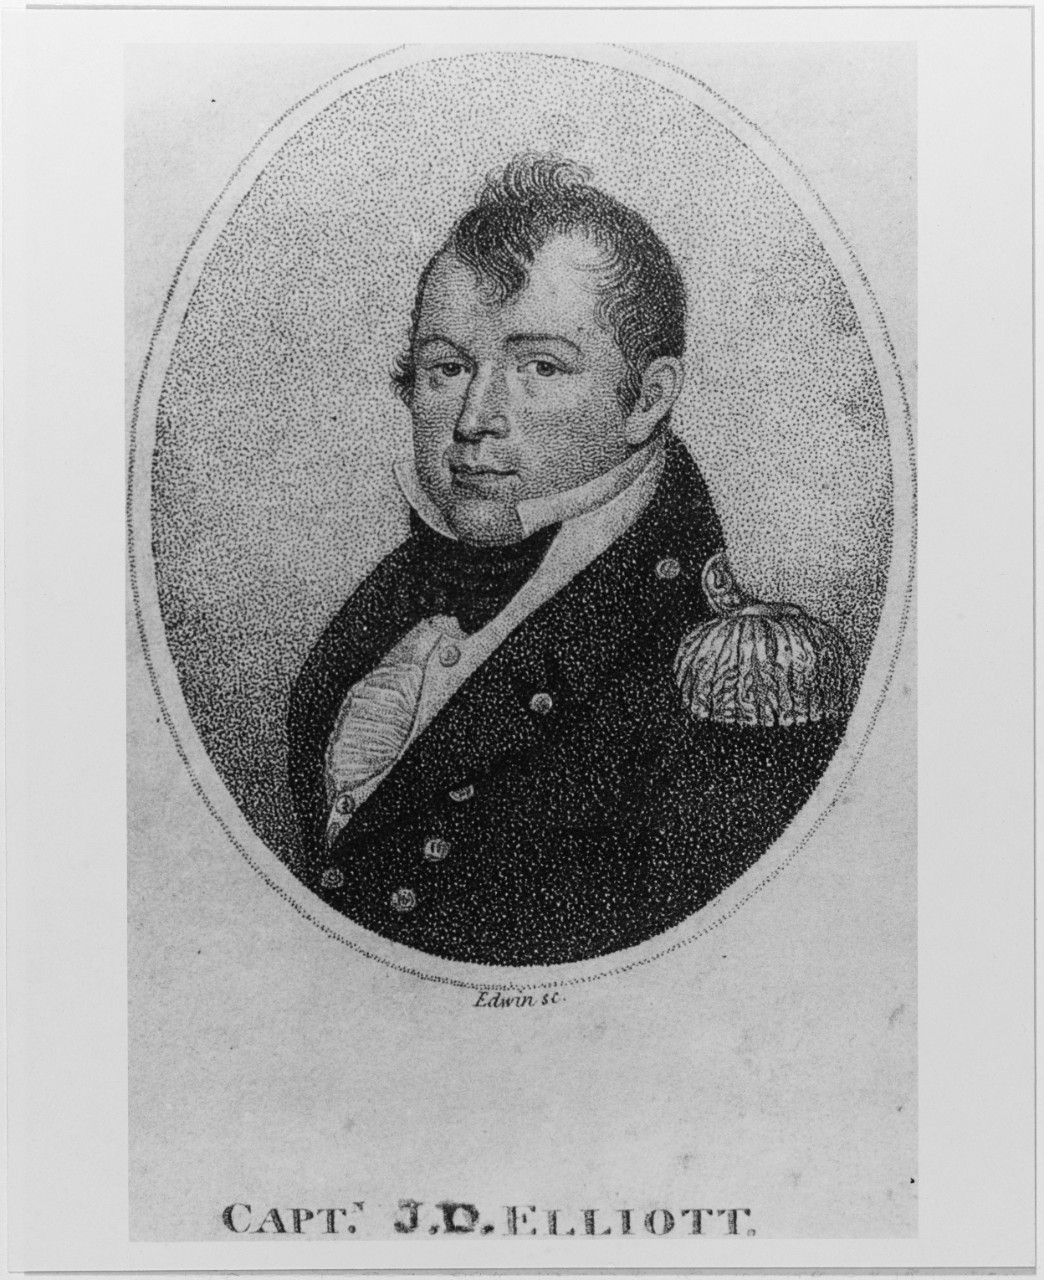 Commodore Jesse D. Elliott